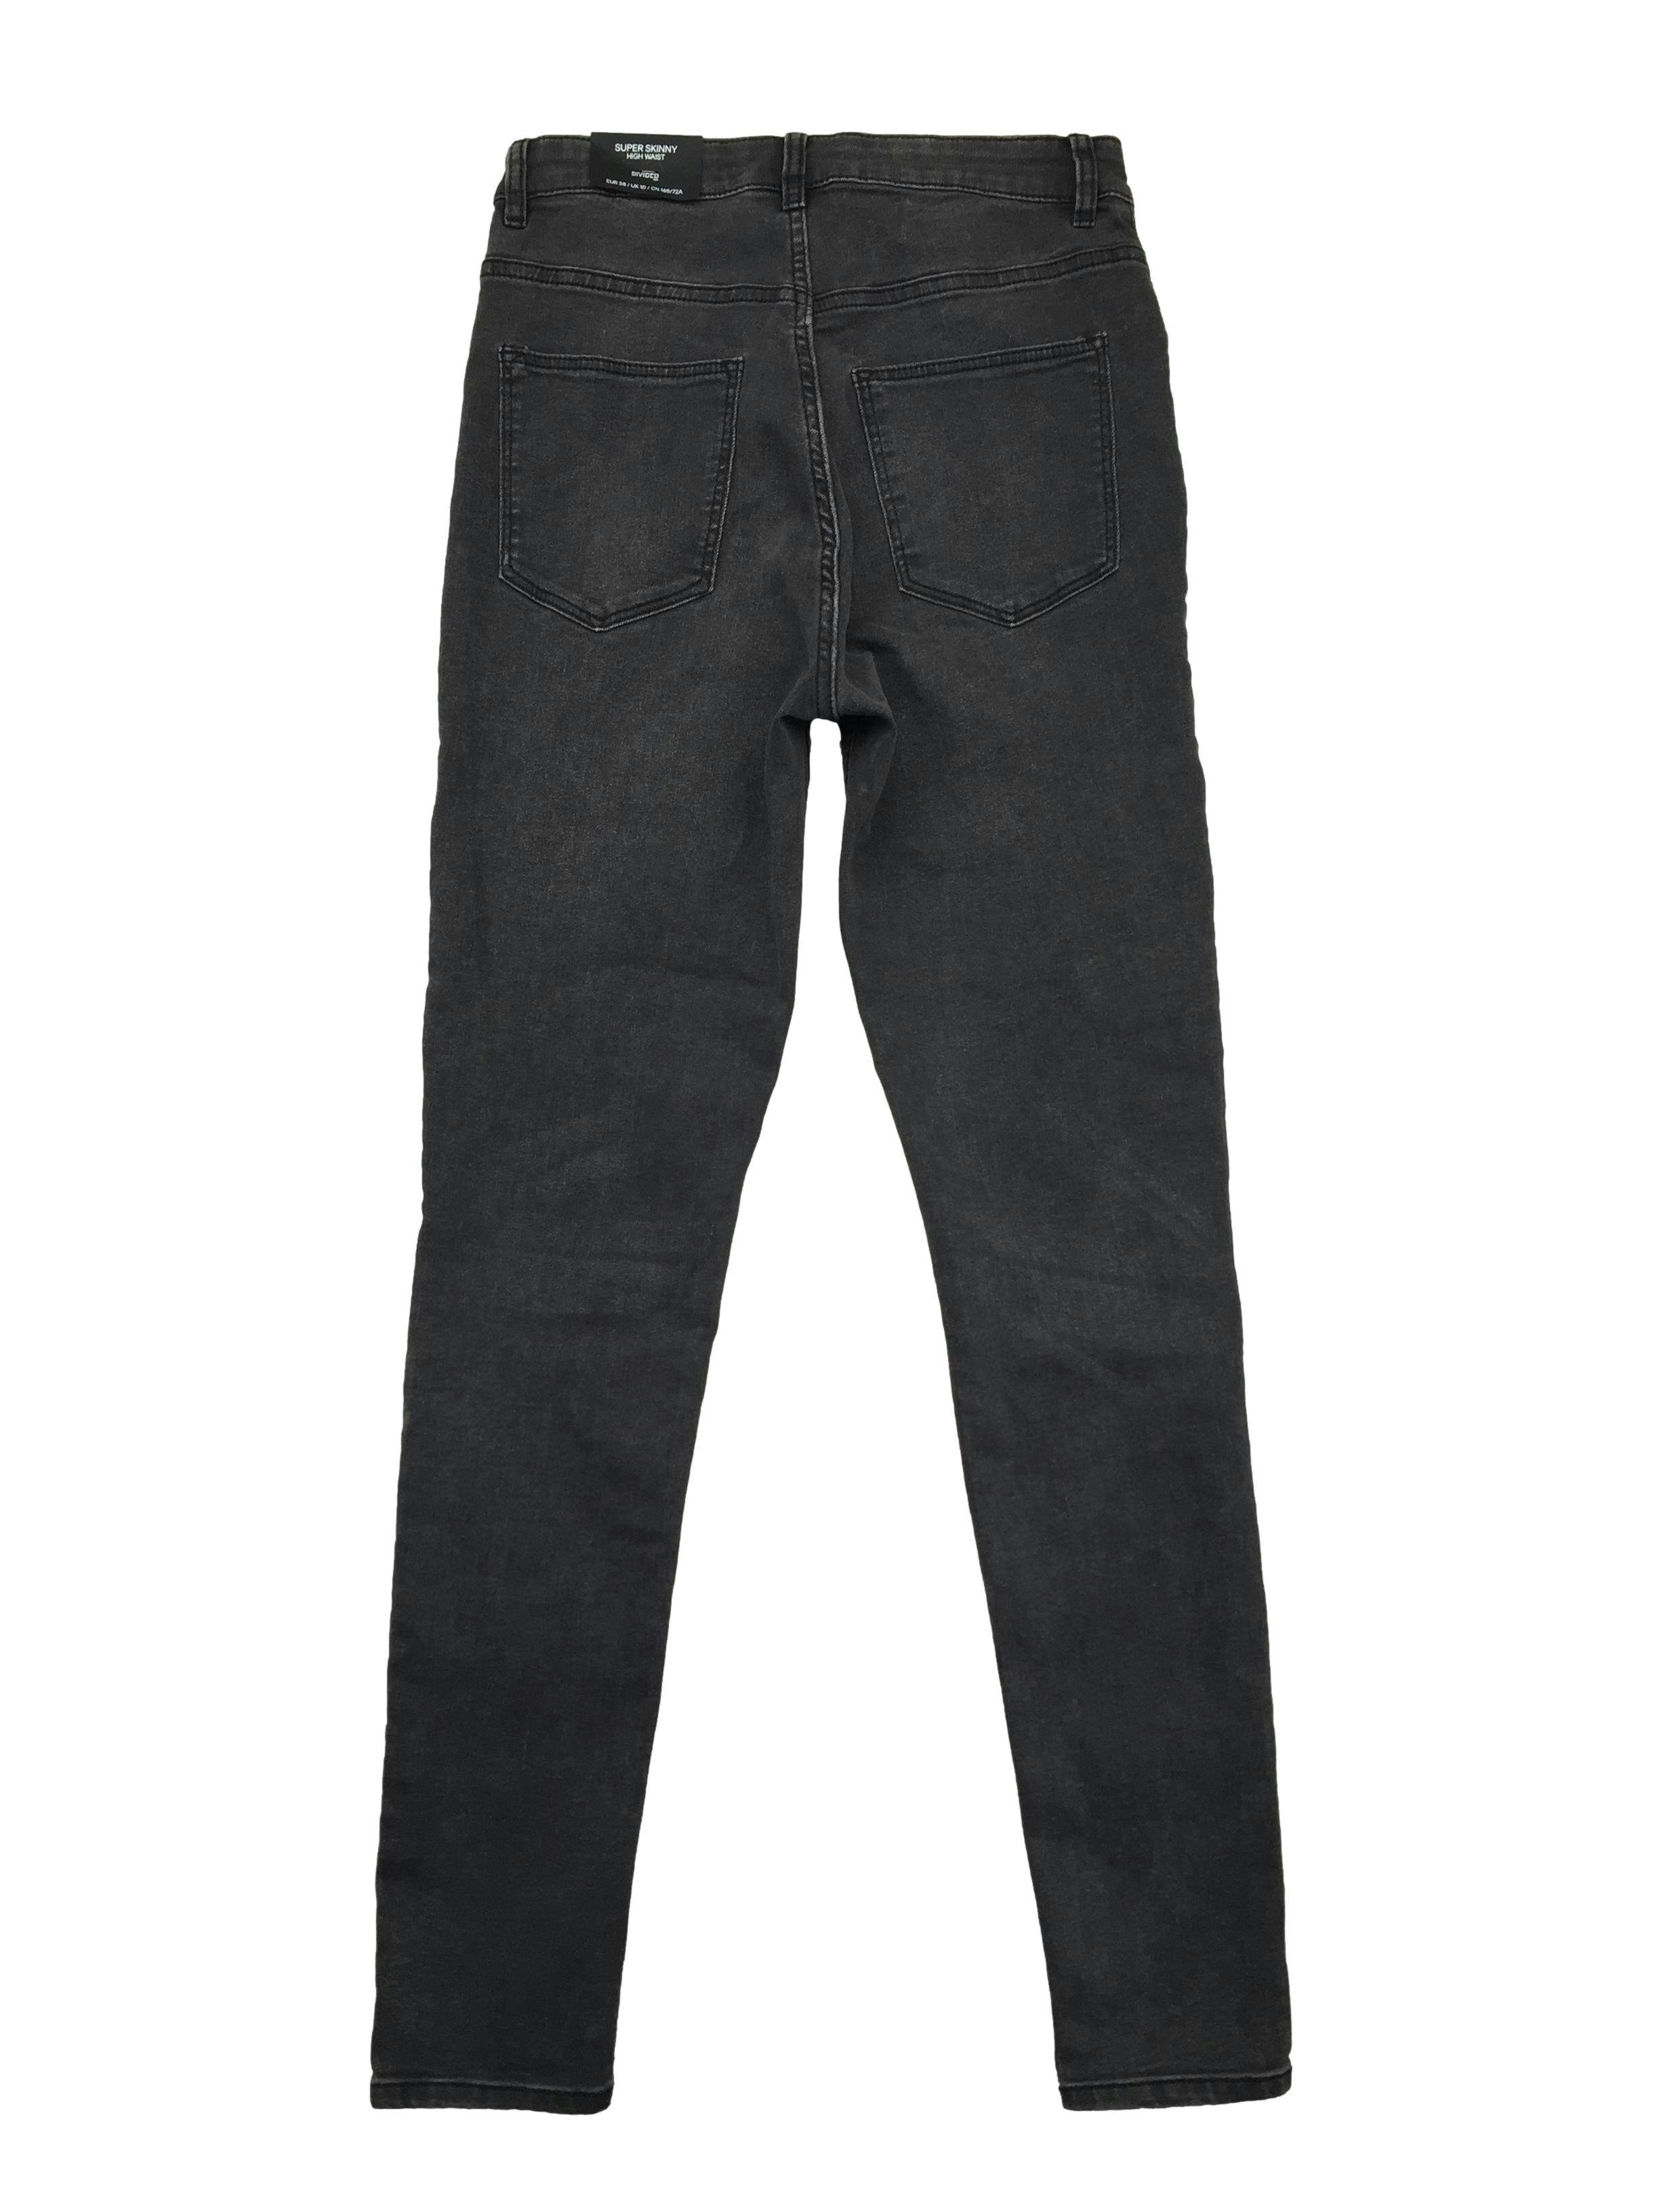 Skinny jean H&M efecto lavado, bolsillos traseros. Cintura: 68cm, Largo: 100cm, Tiro: 27cm. Nuevo con etiqueta.